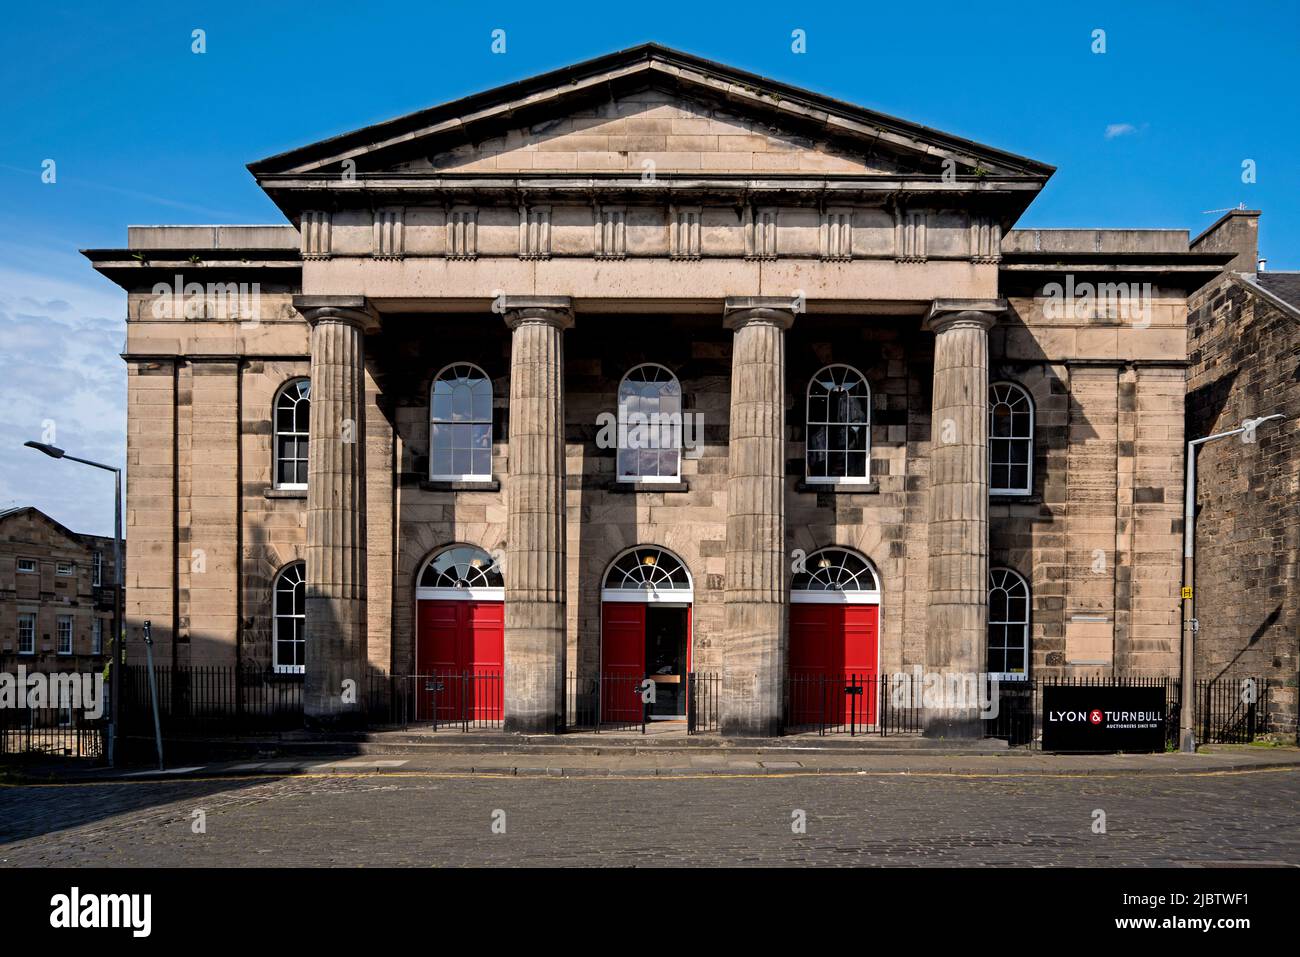 Exterior view of Lyon & Turnbull Auction House in Broughton Place, Edinburgh, Scotland, UK. Stock Photo